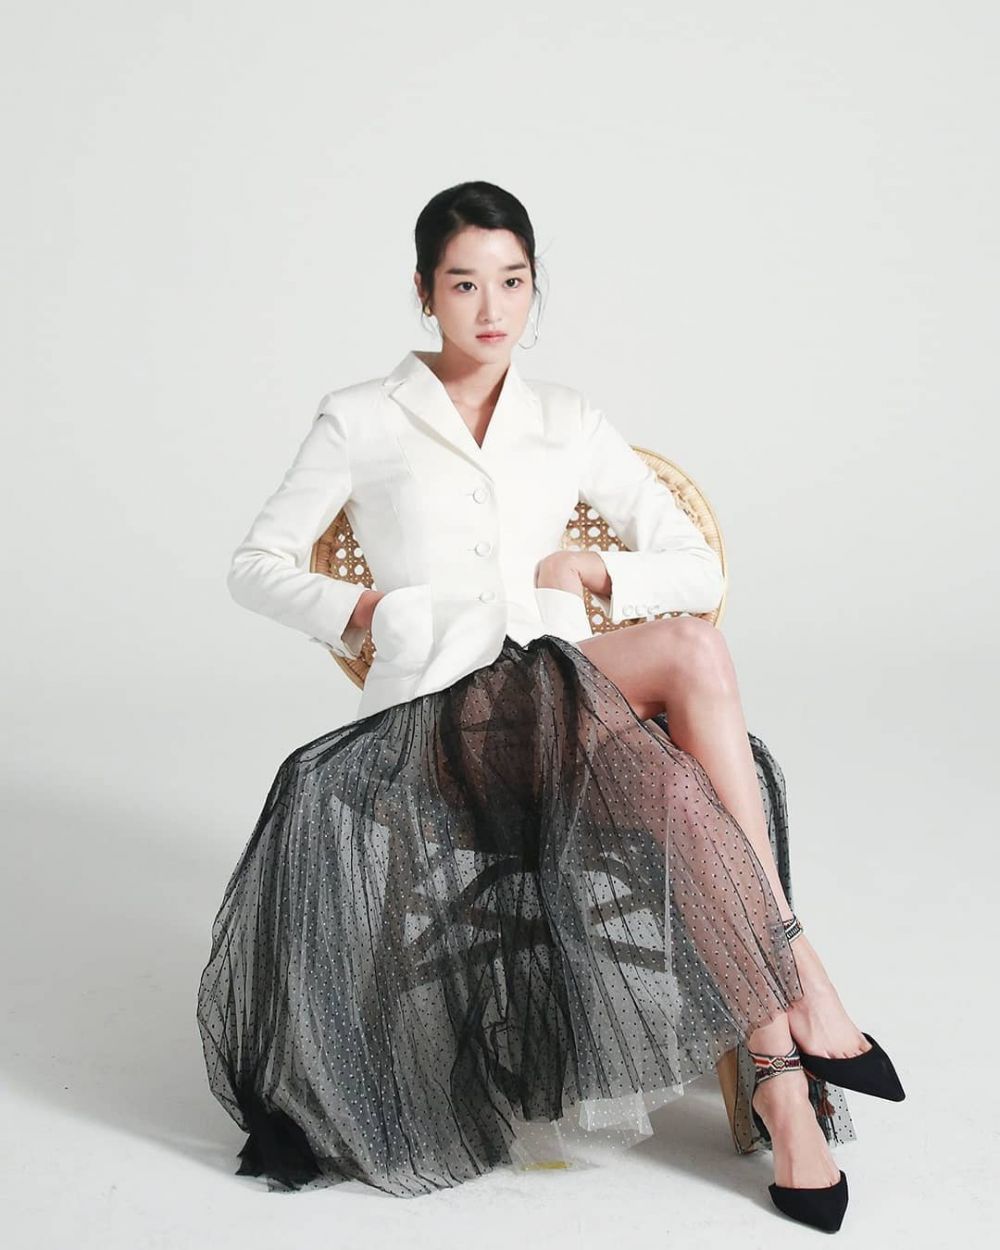 8 Fakta Eve, Drama Terbaru Seo Ye Ji